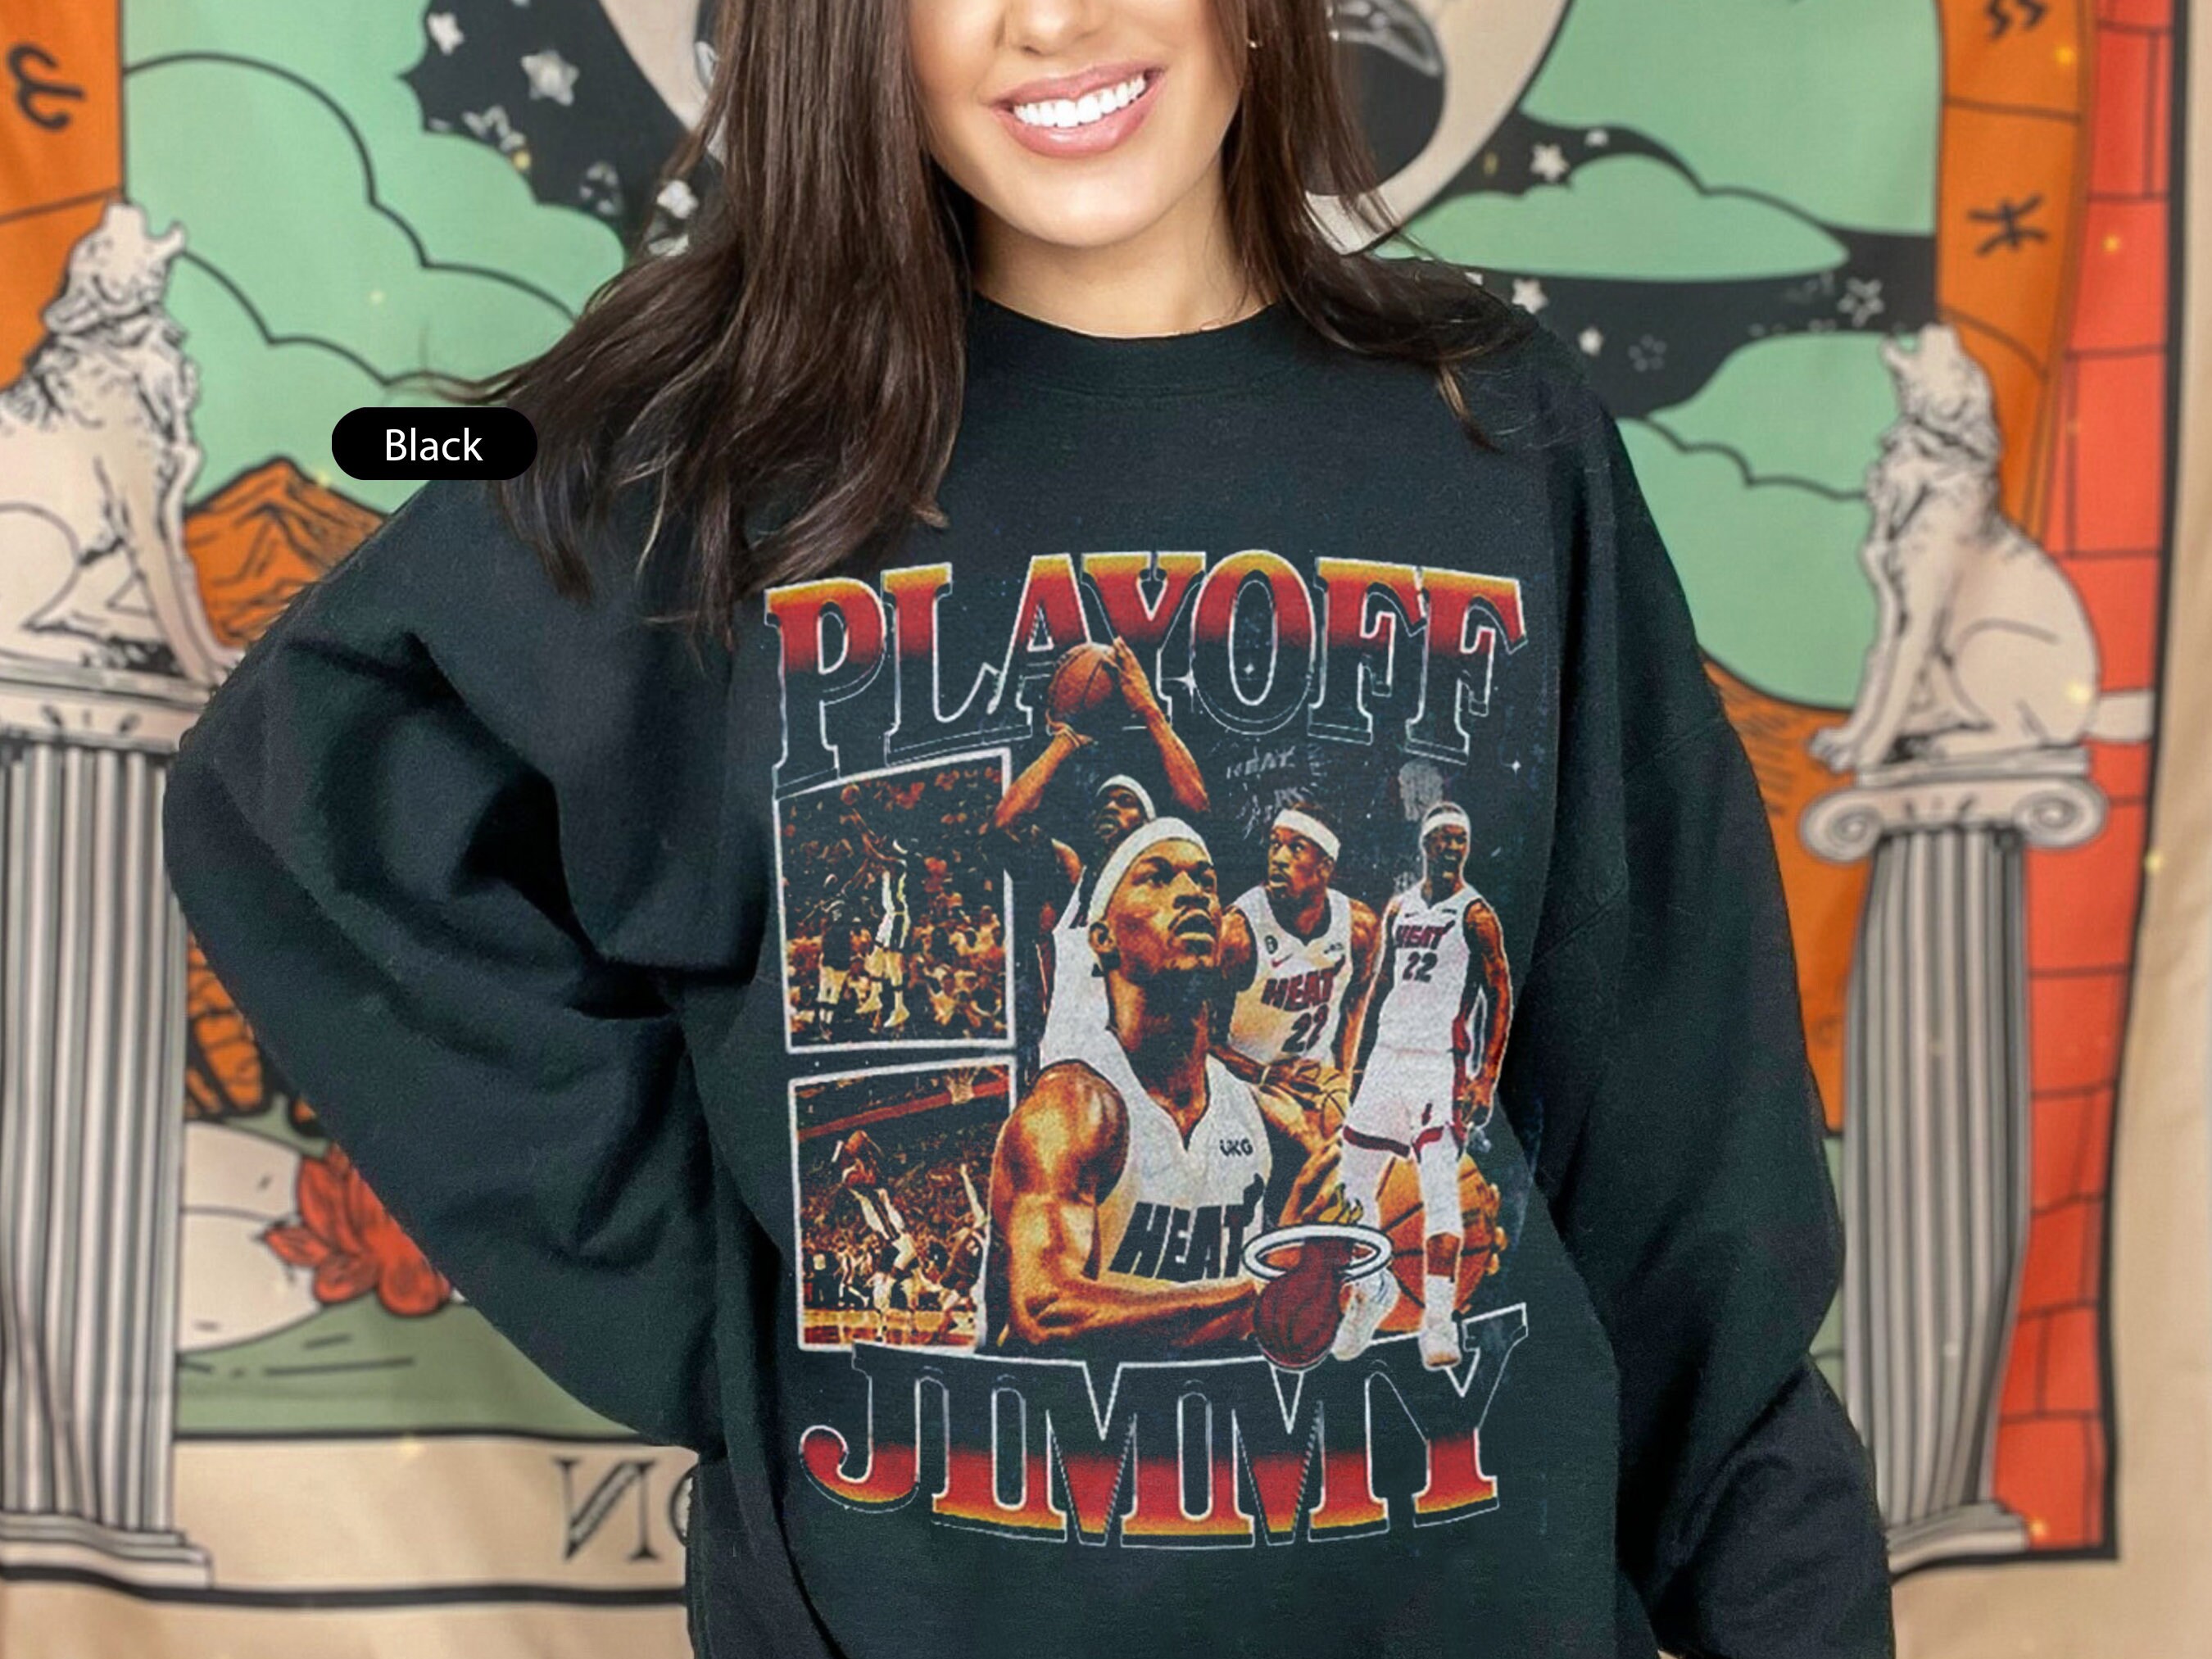 Jimmy Butler Bucket Miami Basketball Shirt, hoodie, sweater, long